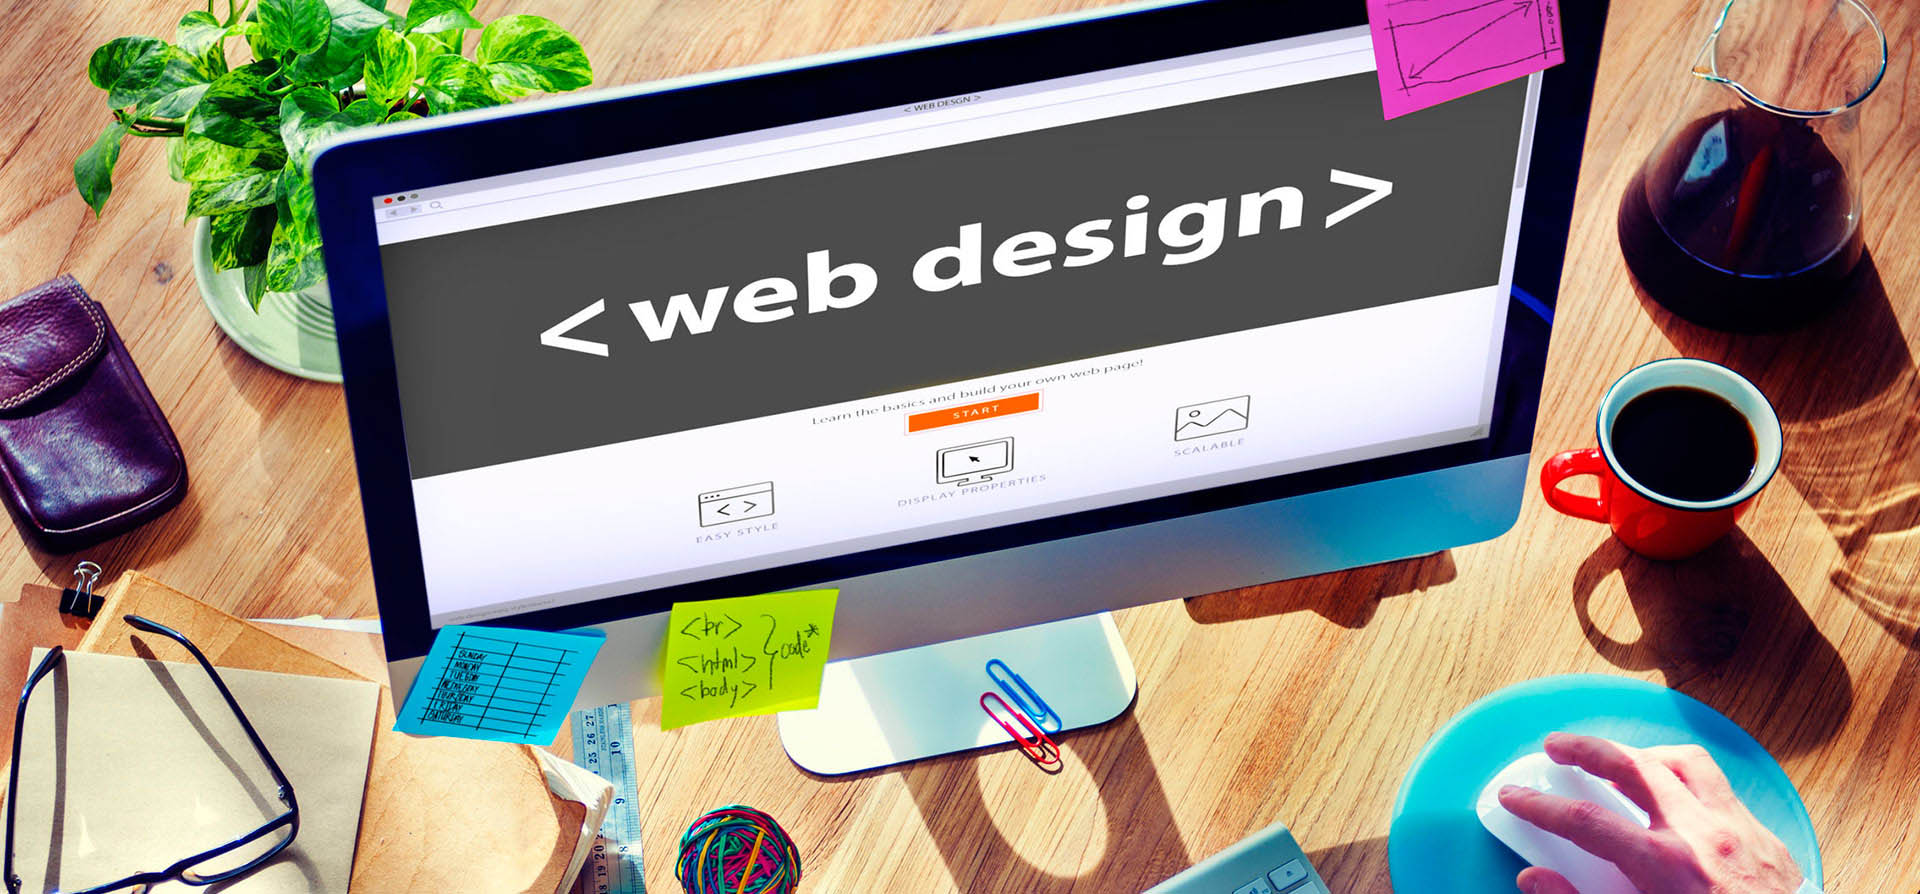 HDT Web Design Cape Town - Digital Web Marketing & SEO Experts